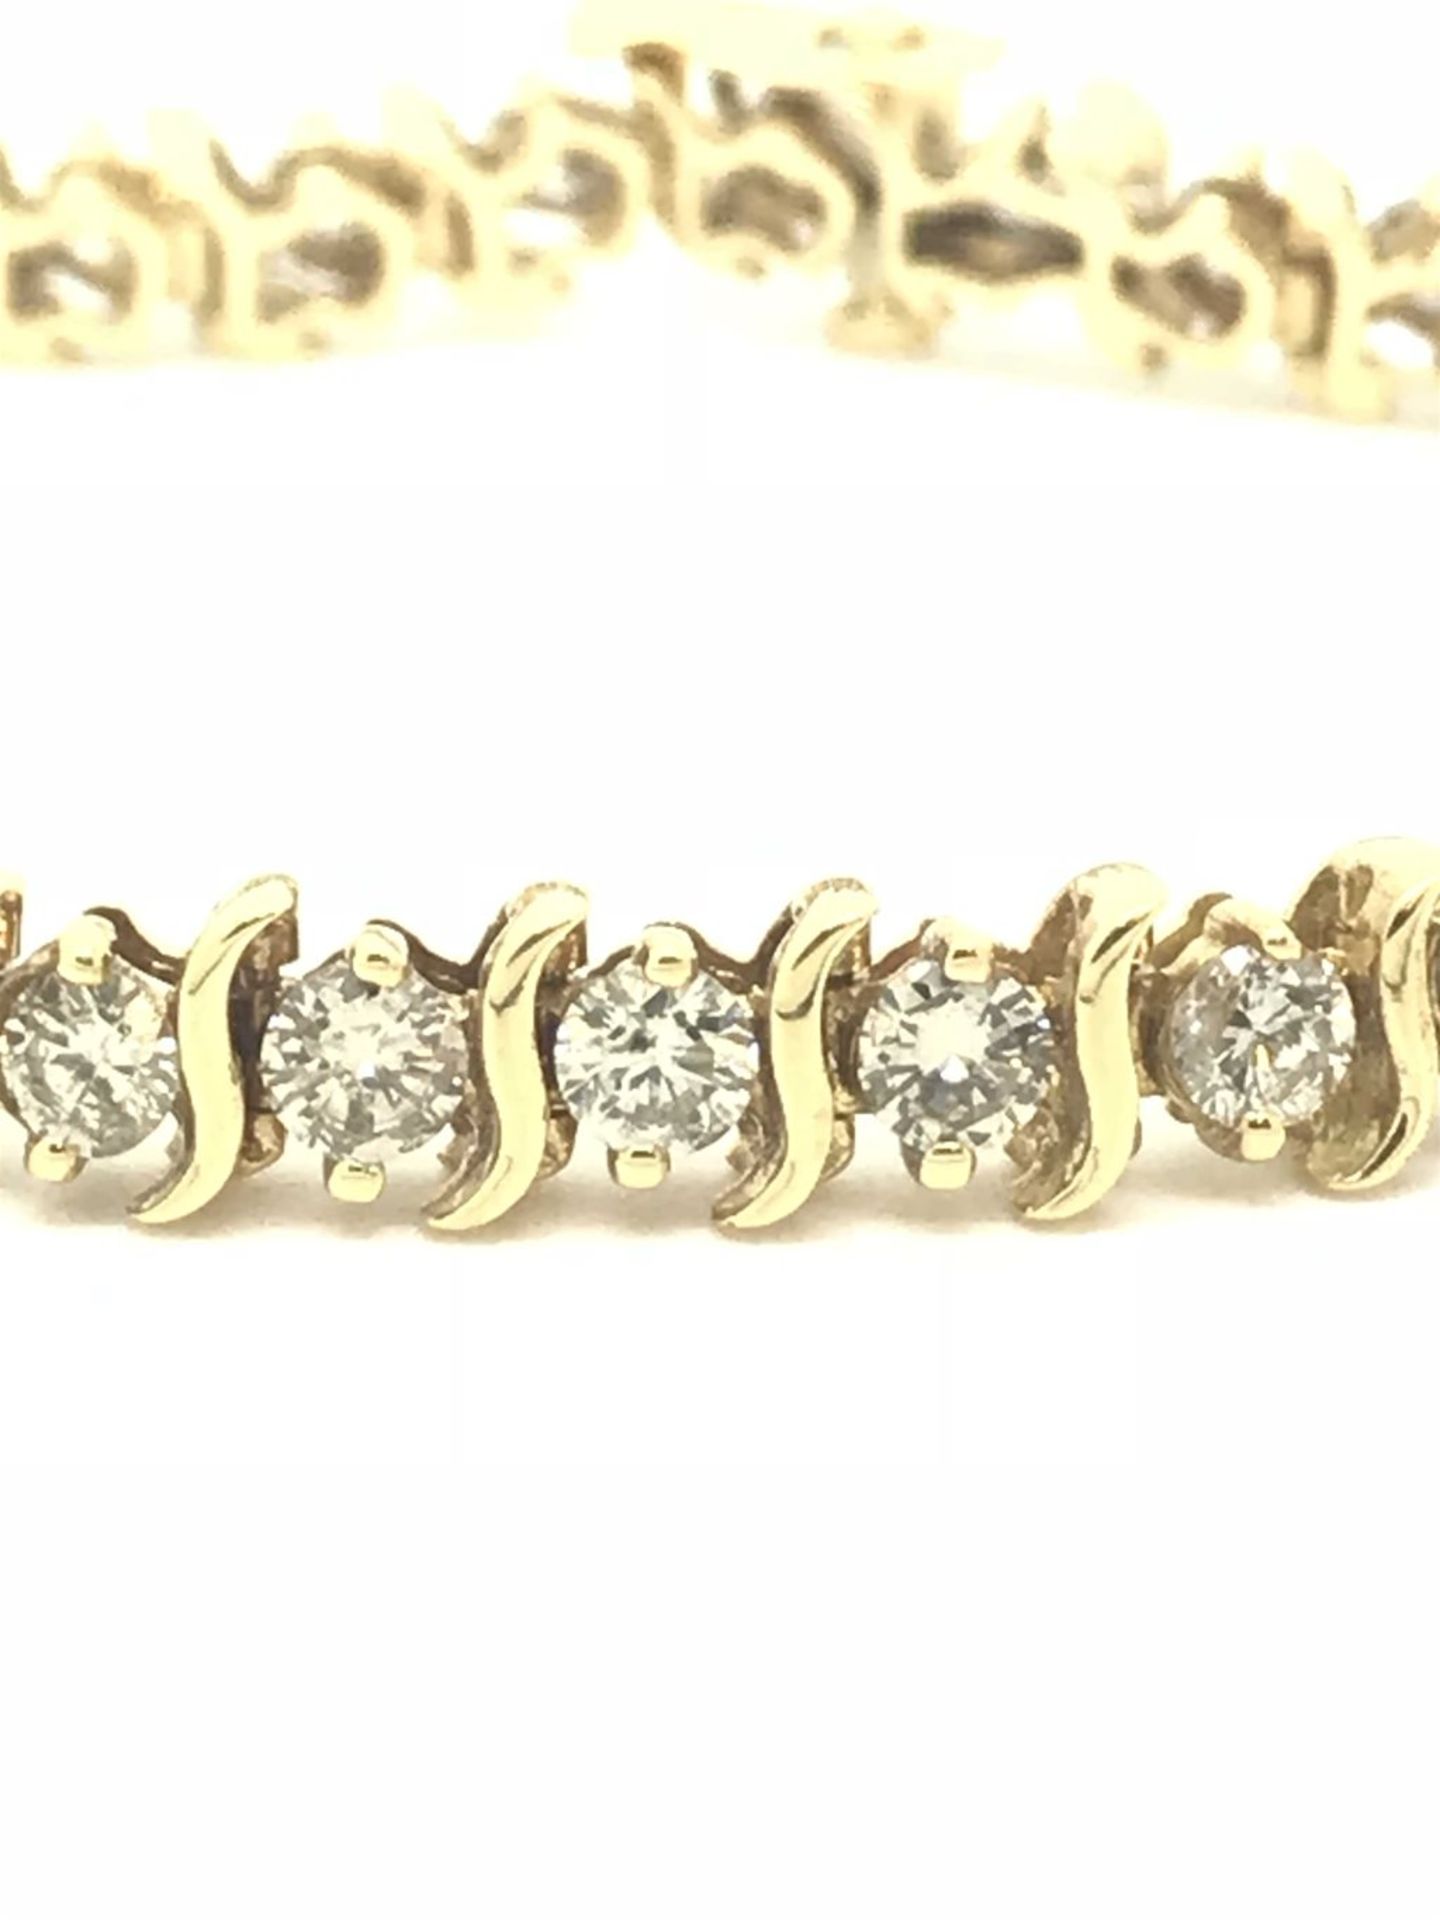 5.10ct Diamond Tennis Bracelet, 18ct Yellow Gold - Image 2 of 5